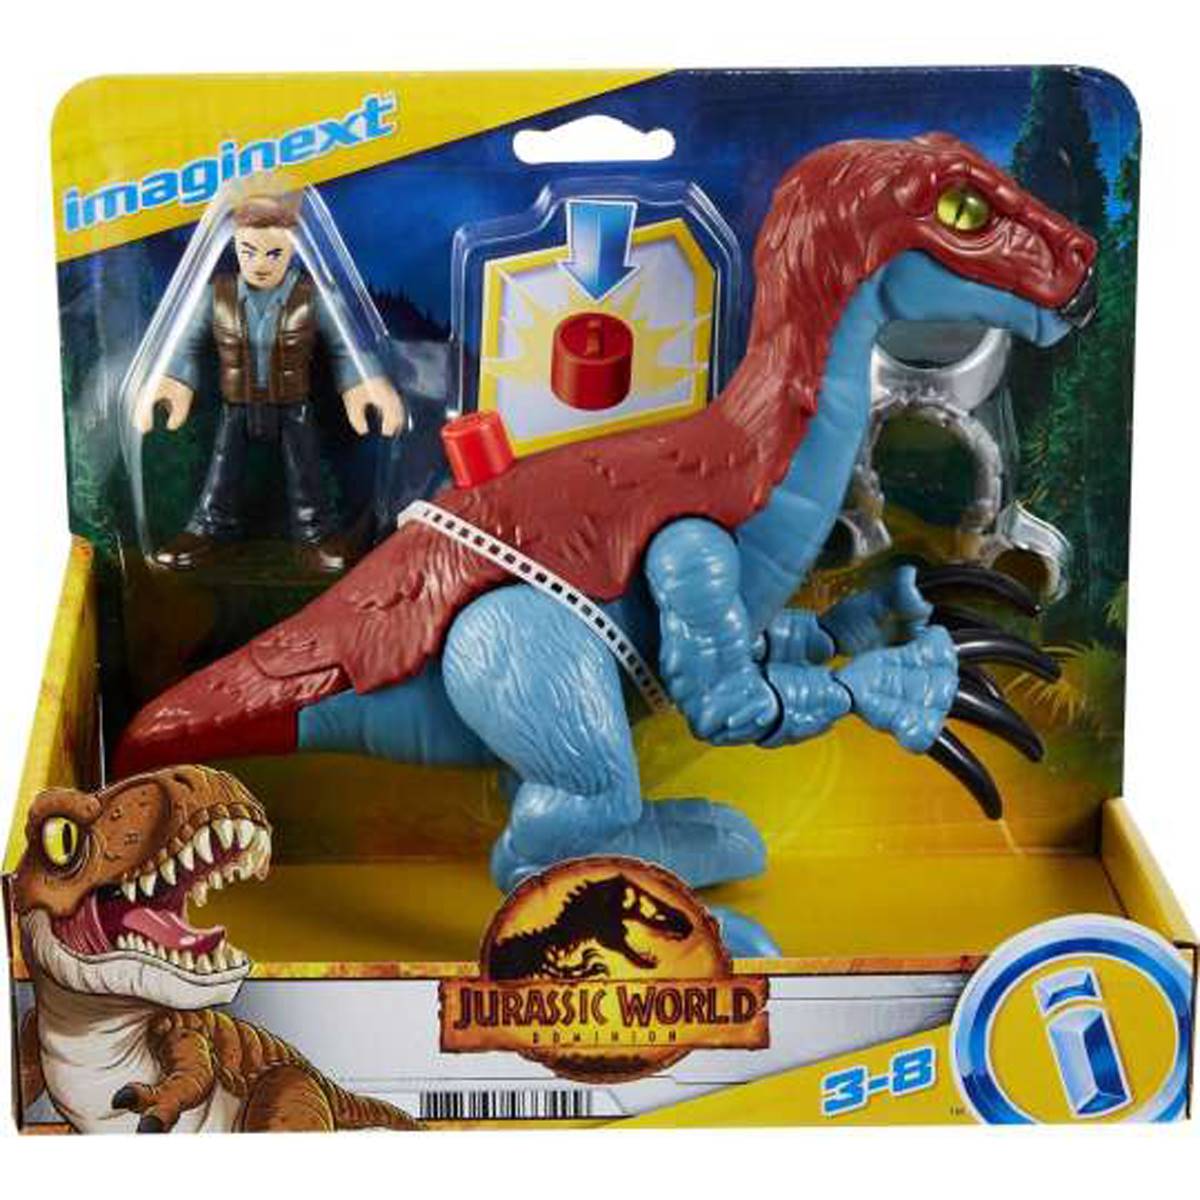 Fisher-Price(R) Imaginext(R) Jurassic World 3 Slasher Dino